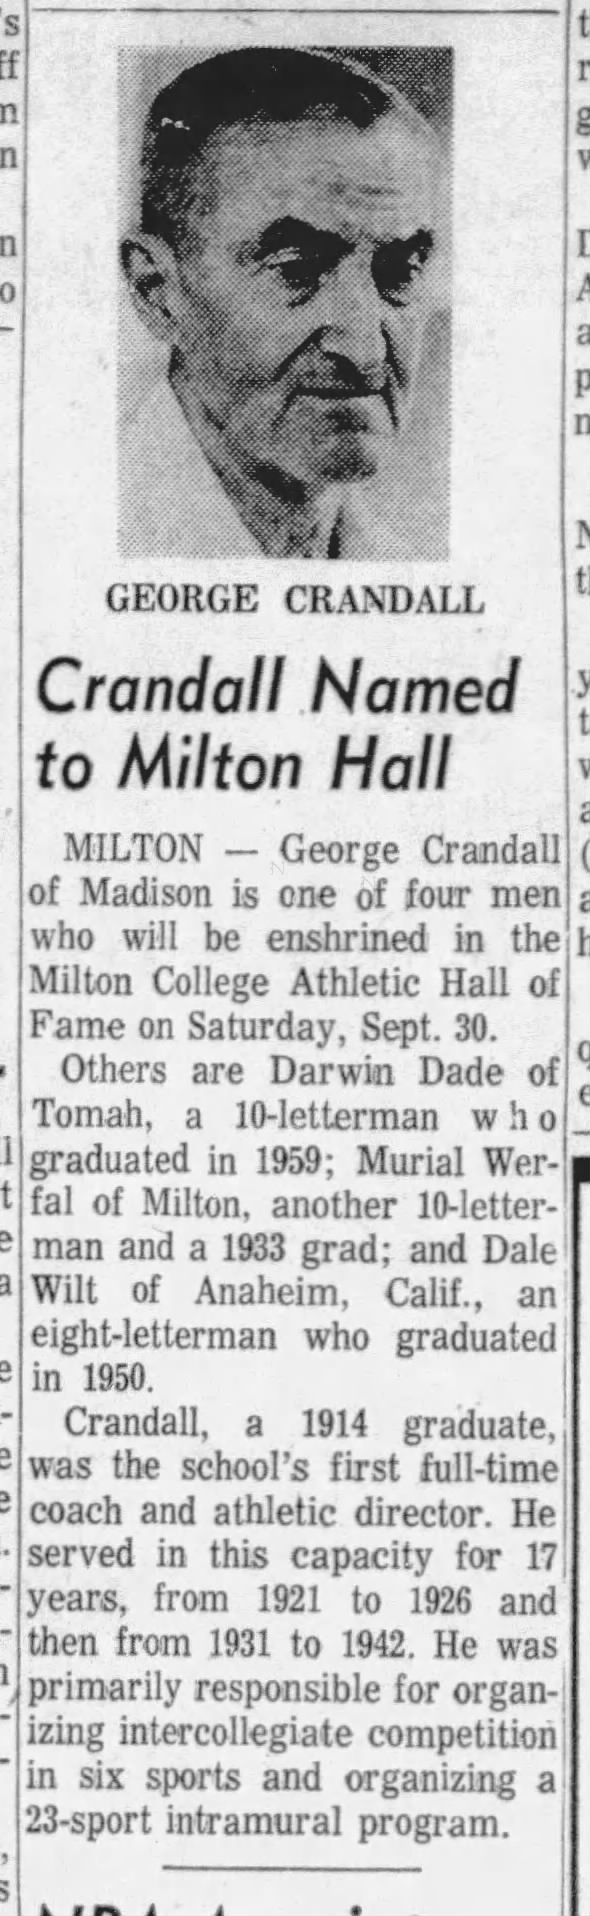 Crandall Named to Milton Hall